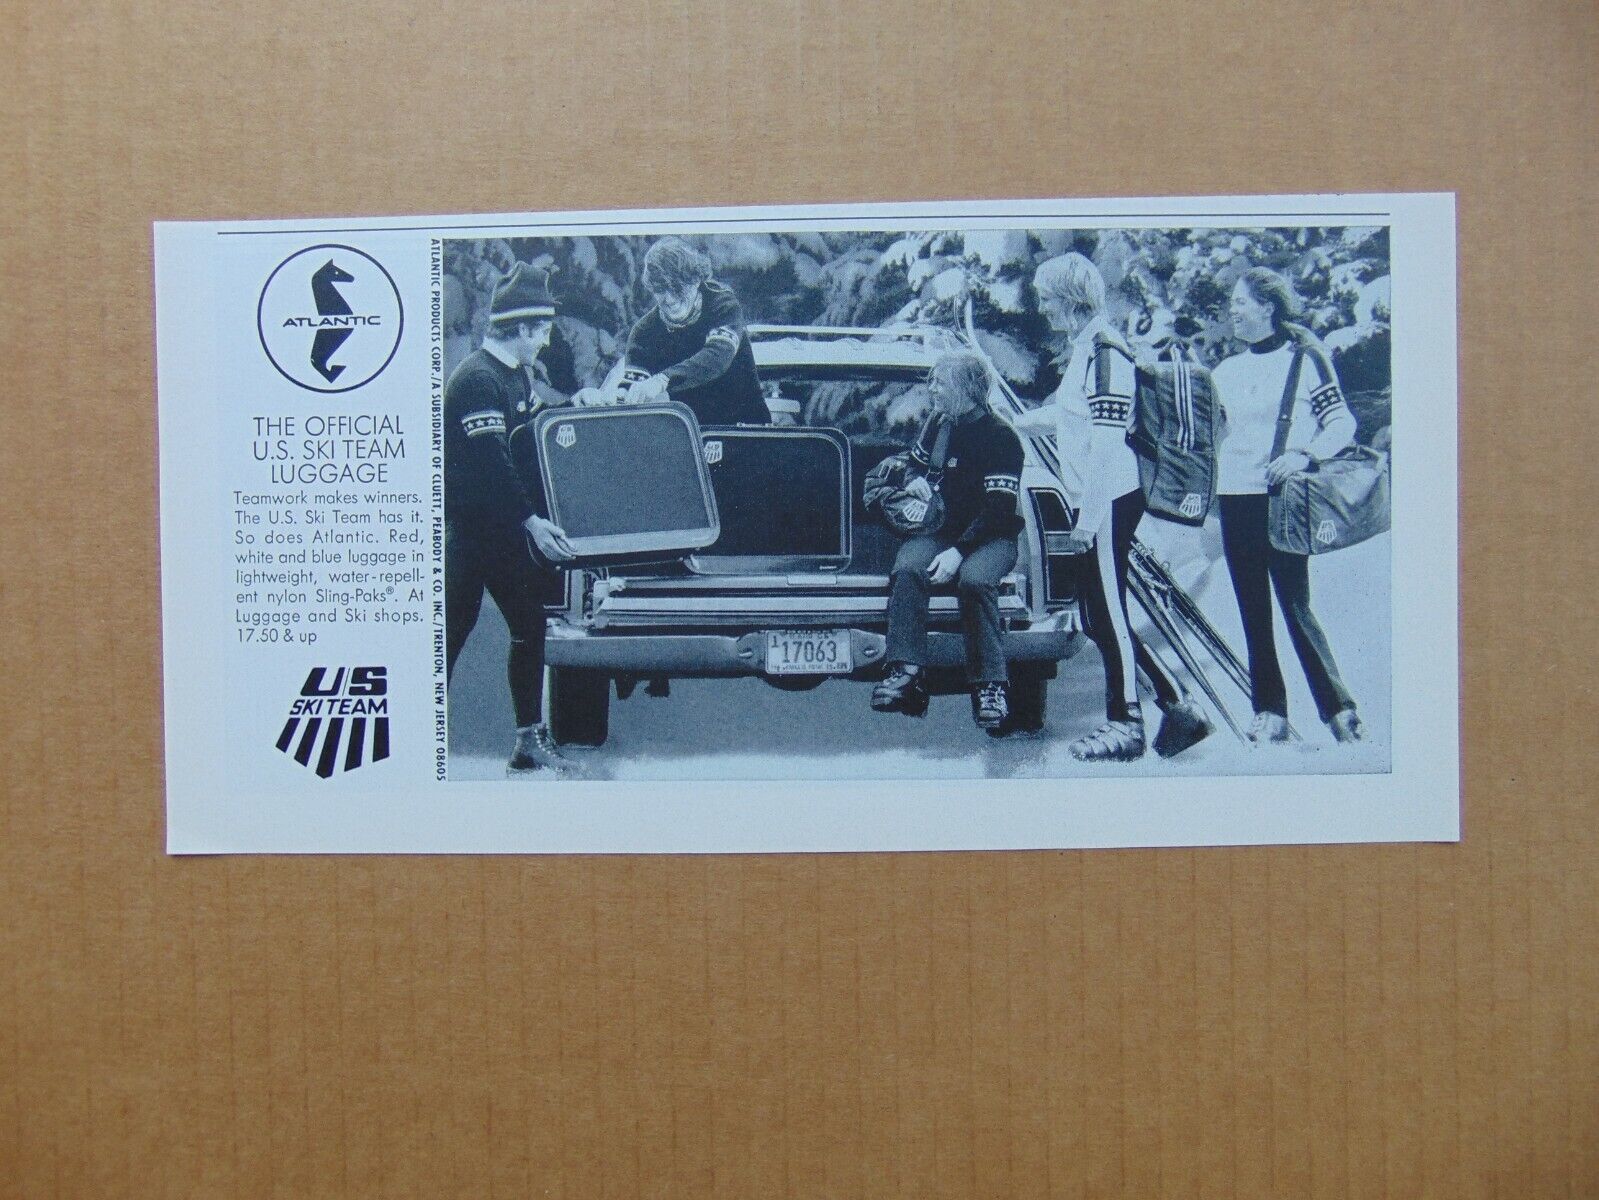 1971 U.S. SKI TEAM Official Luggage ATLANTIC art print ad 